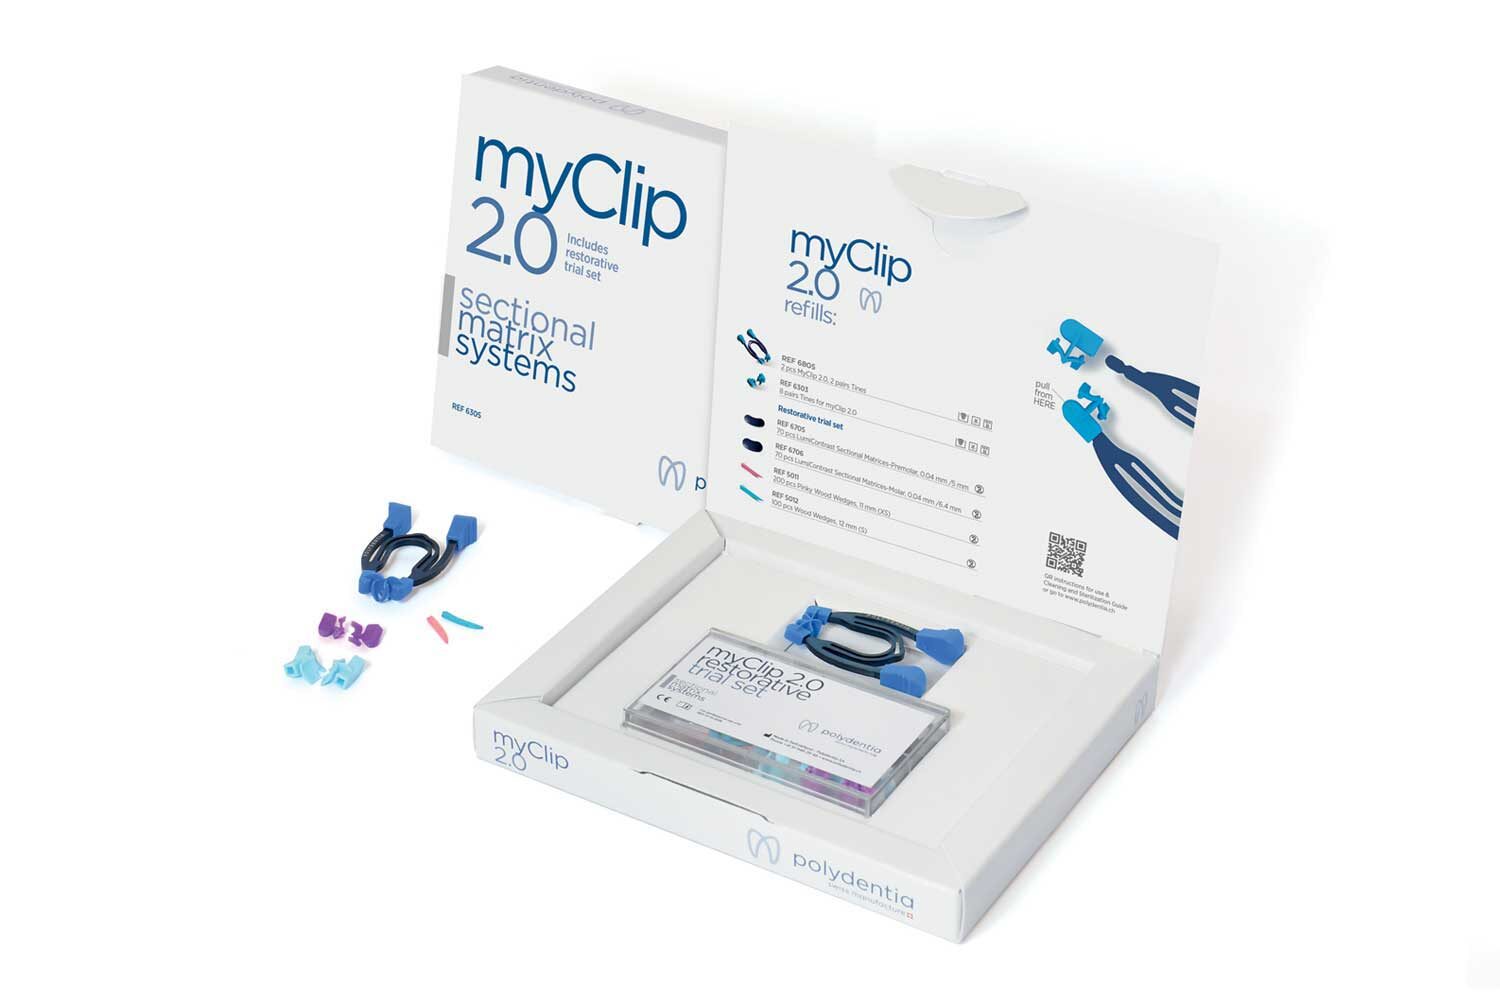 myClip 2.0 sectional matrix system for conservative dentistry